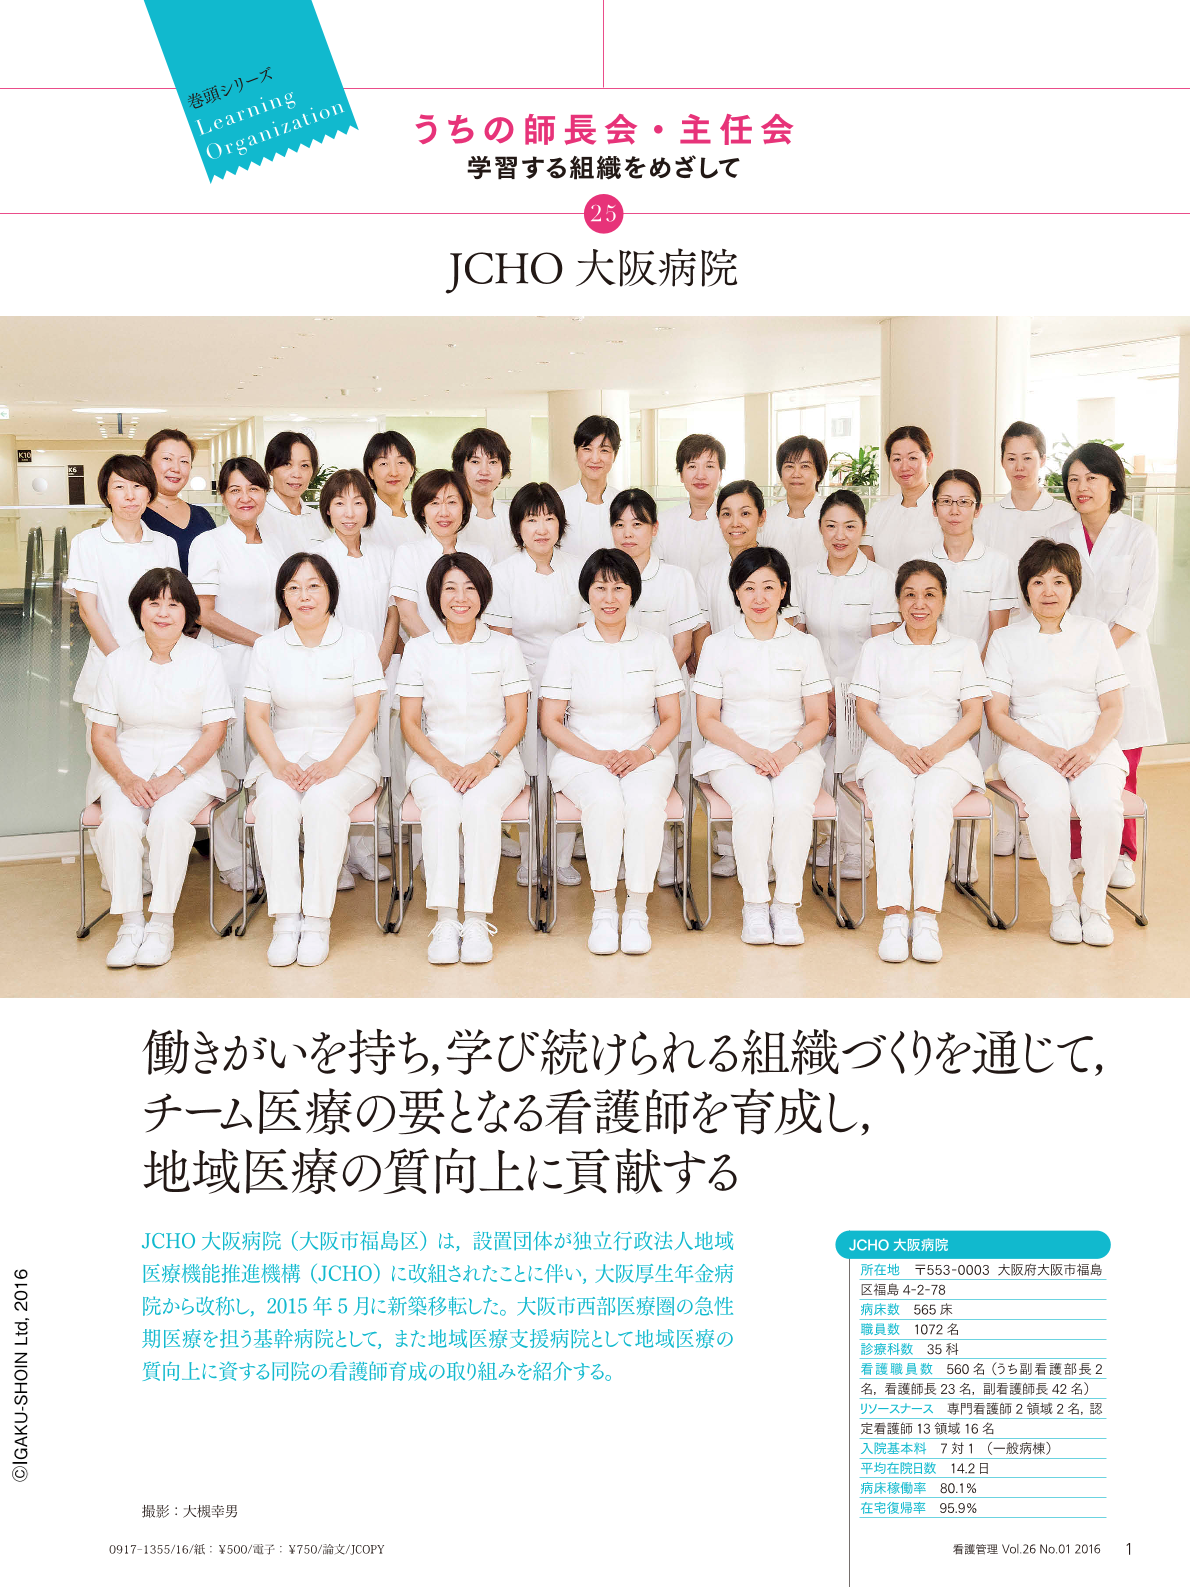 Jcho 大阪 病院